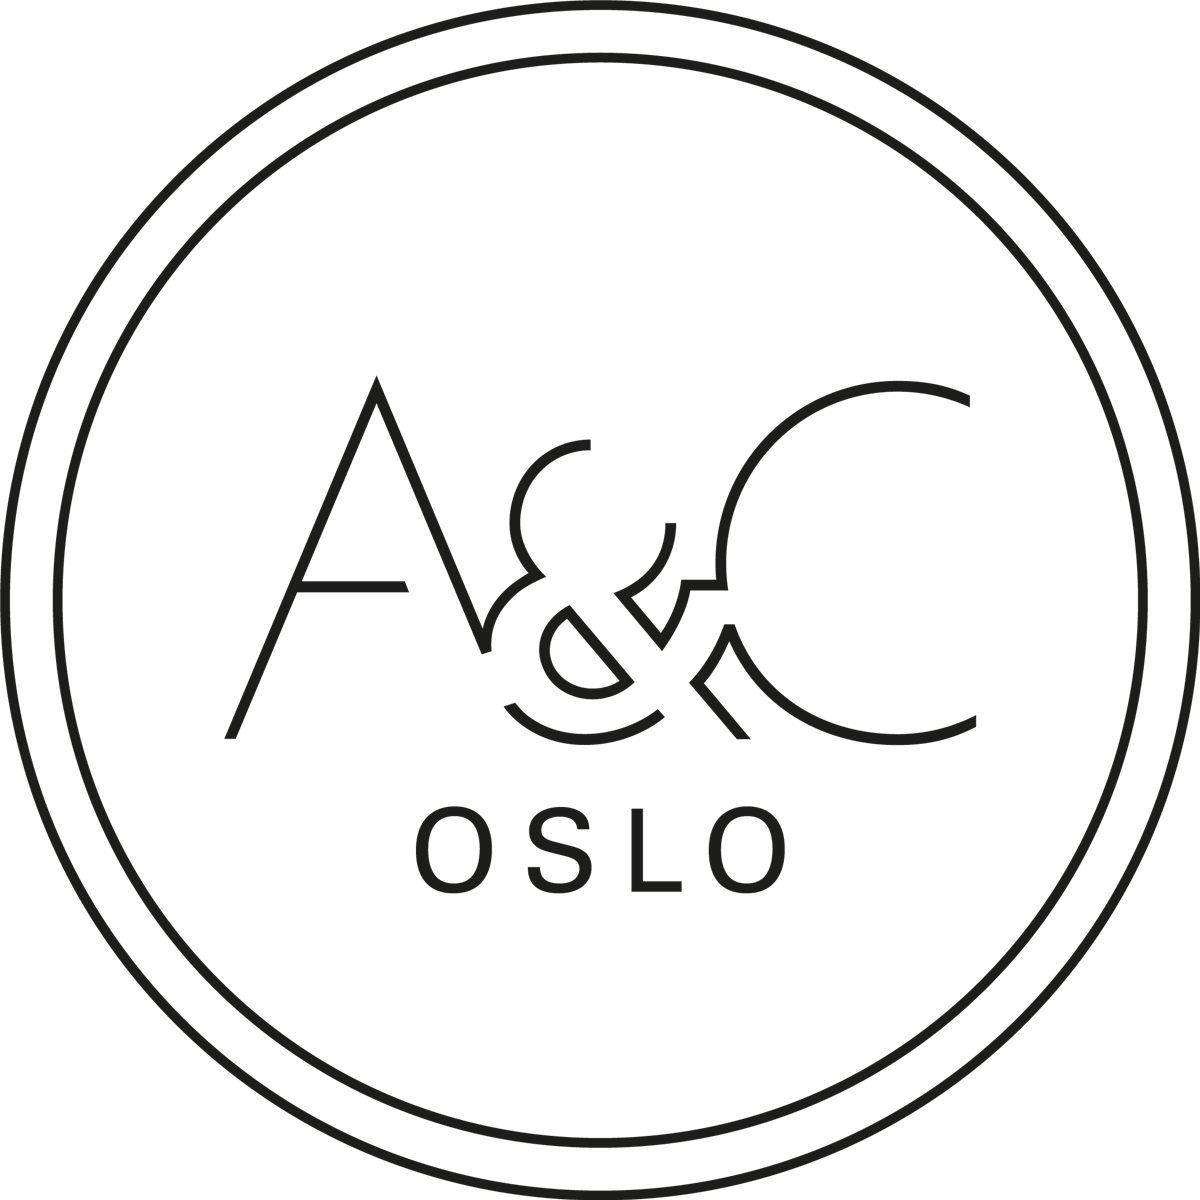 A&C Oslo | Nordisk smykkedesign